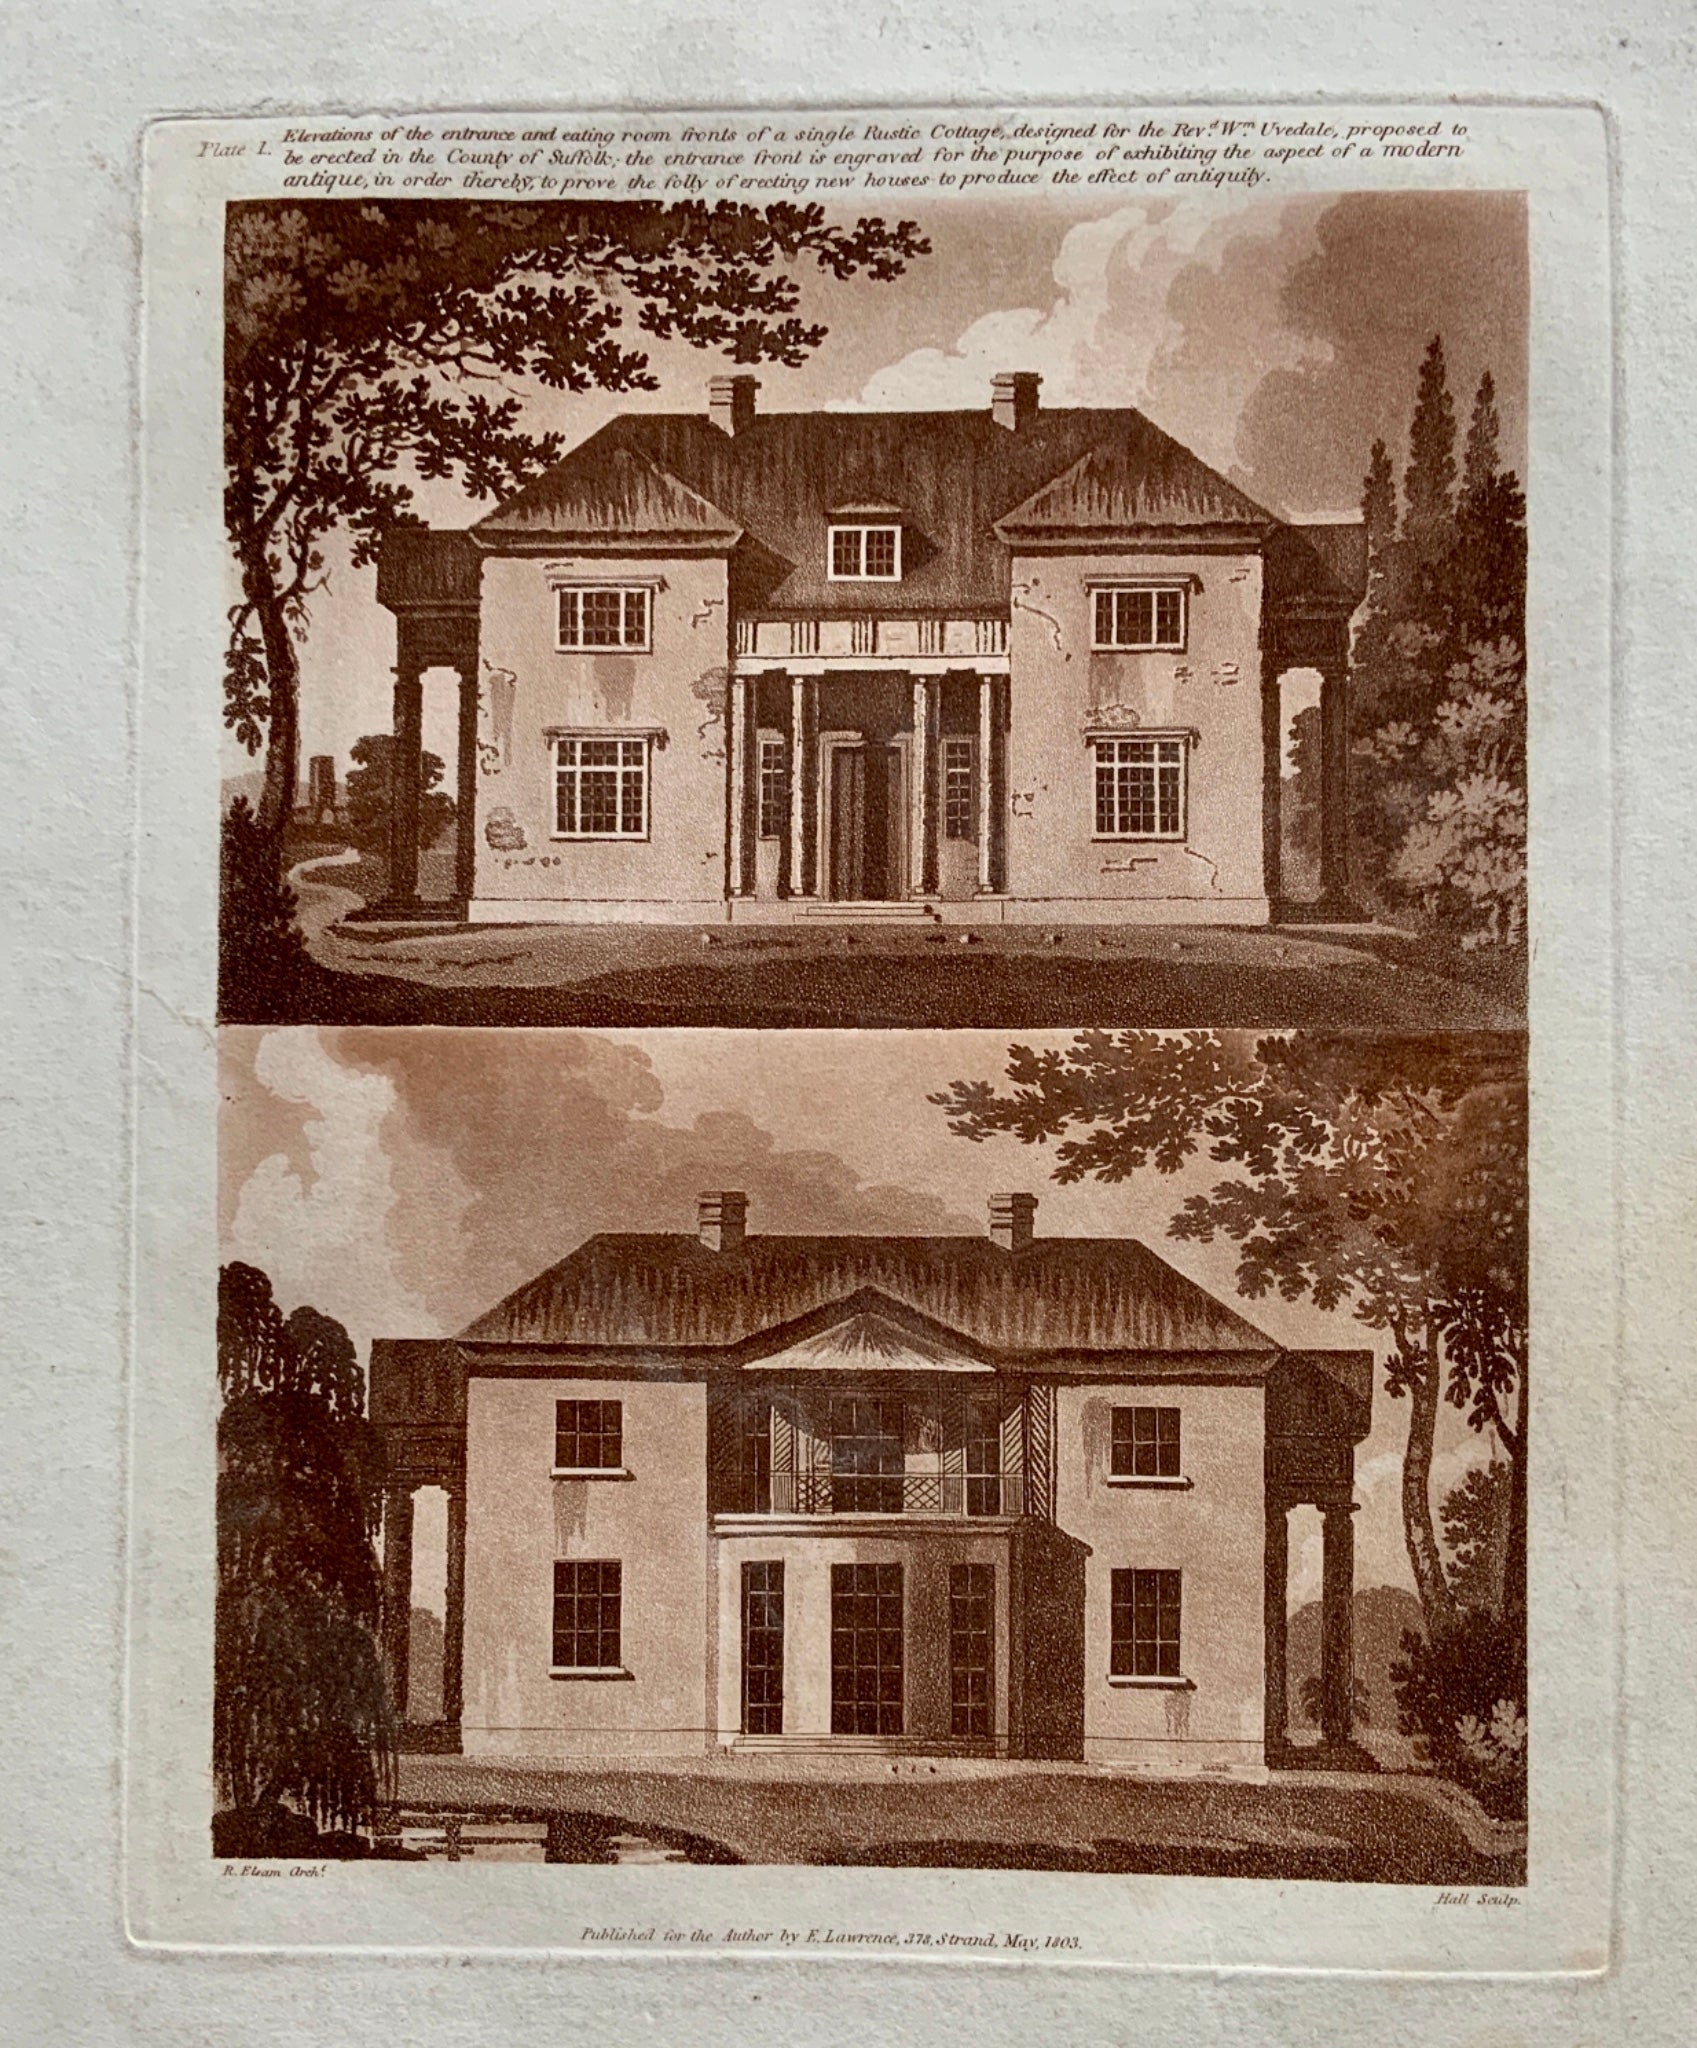 1803 Richard Elsam Folio aquatint Cottage in “Modern Antique” style Architecture